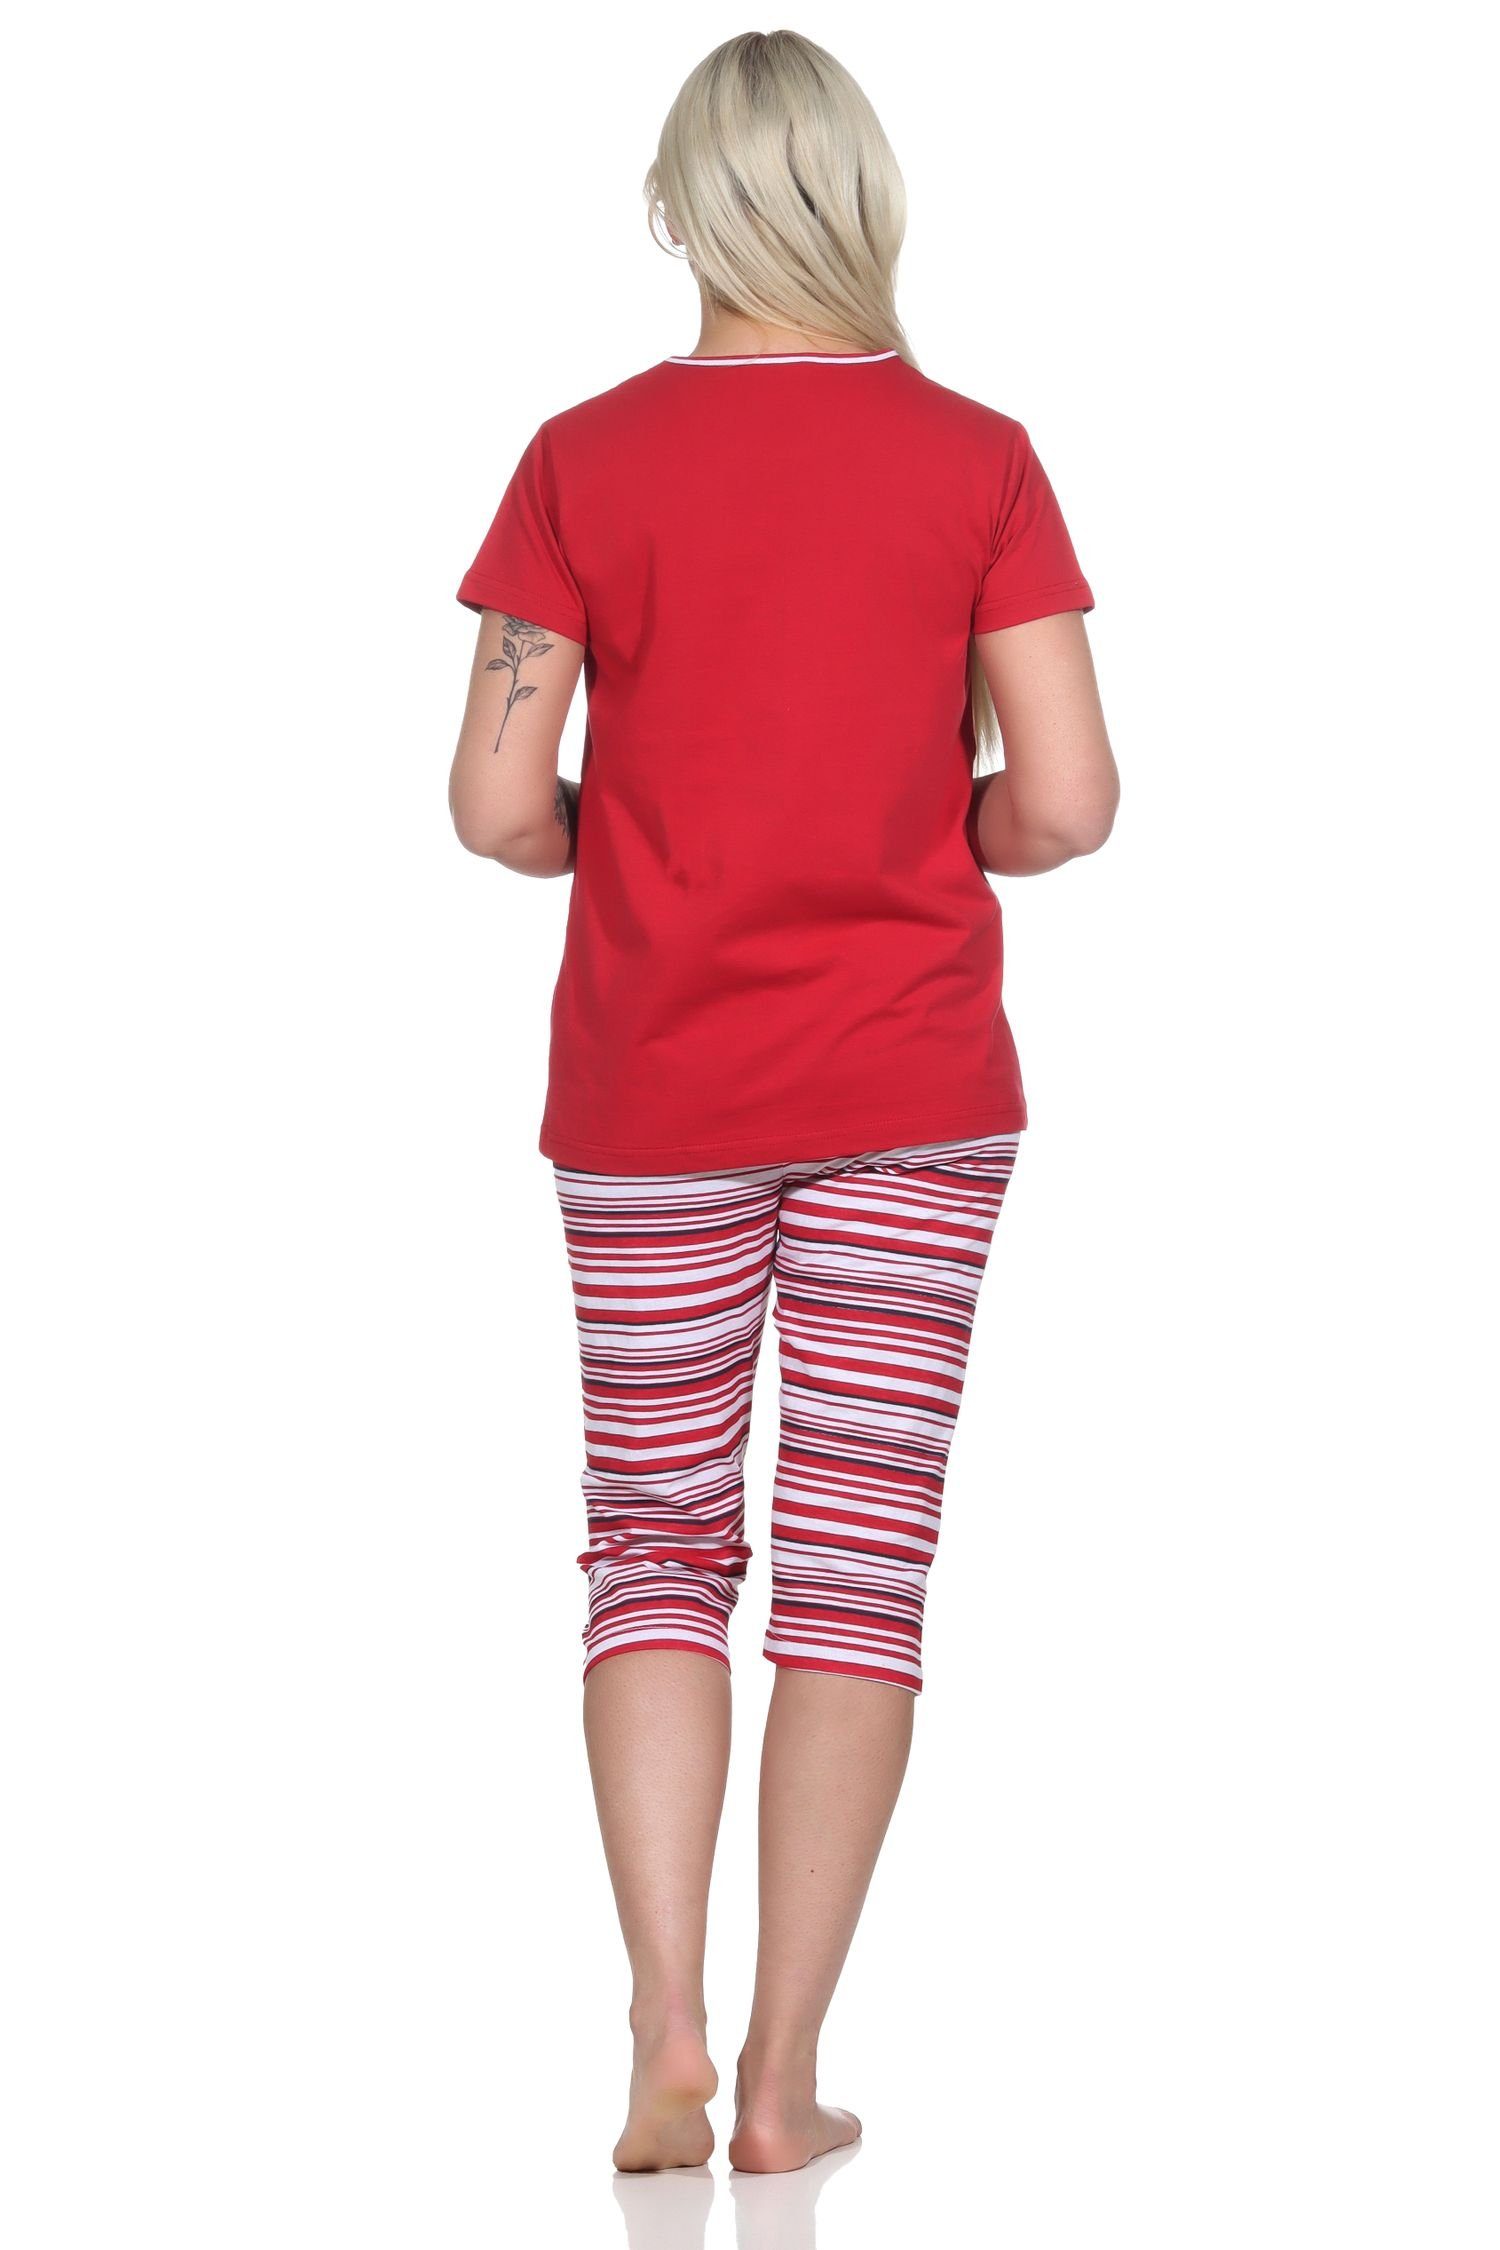 Normann Capri Anker-Motiv Damen Schlafanzug Ringeln Pyjama kurzarm und Pyjama mit rot